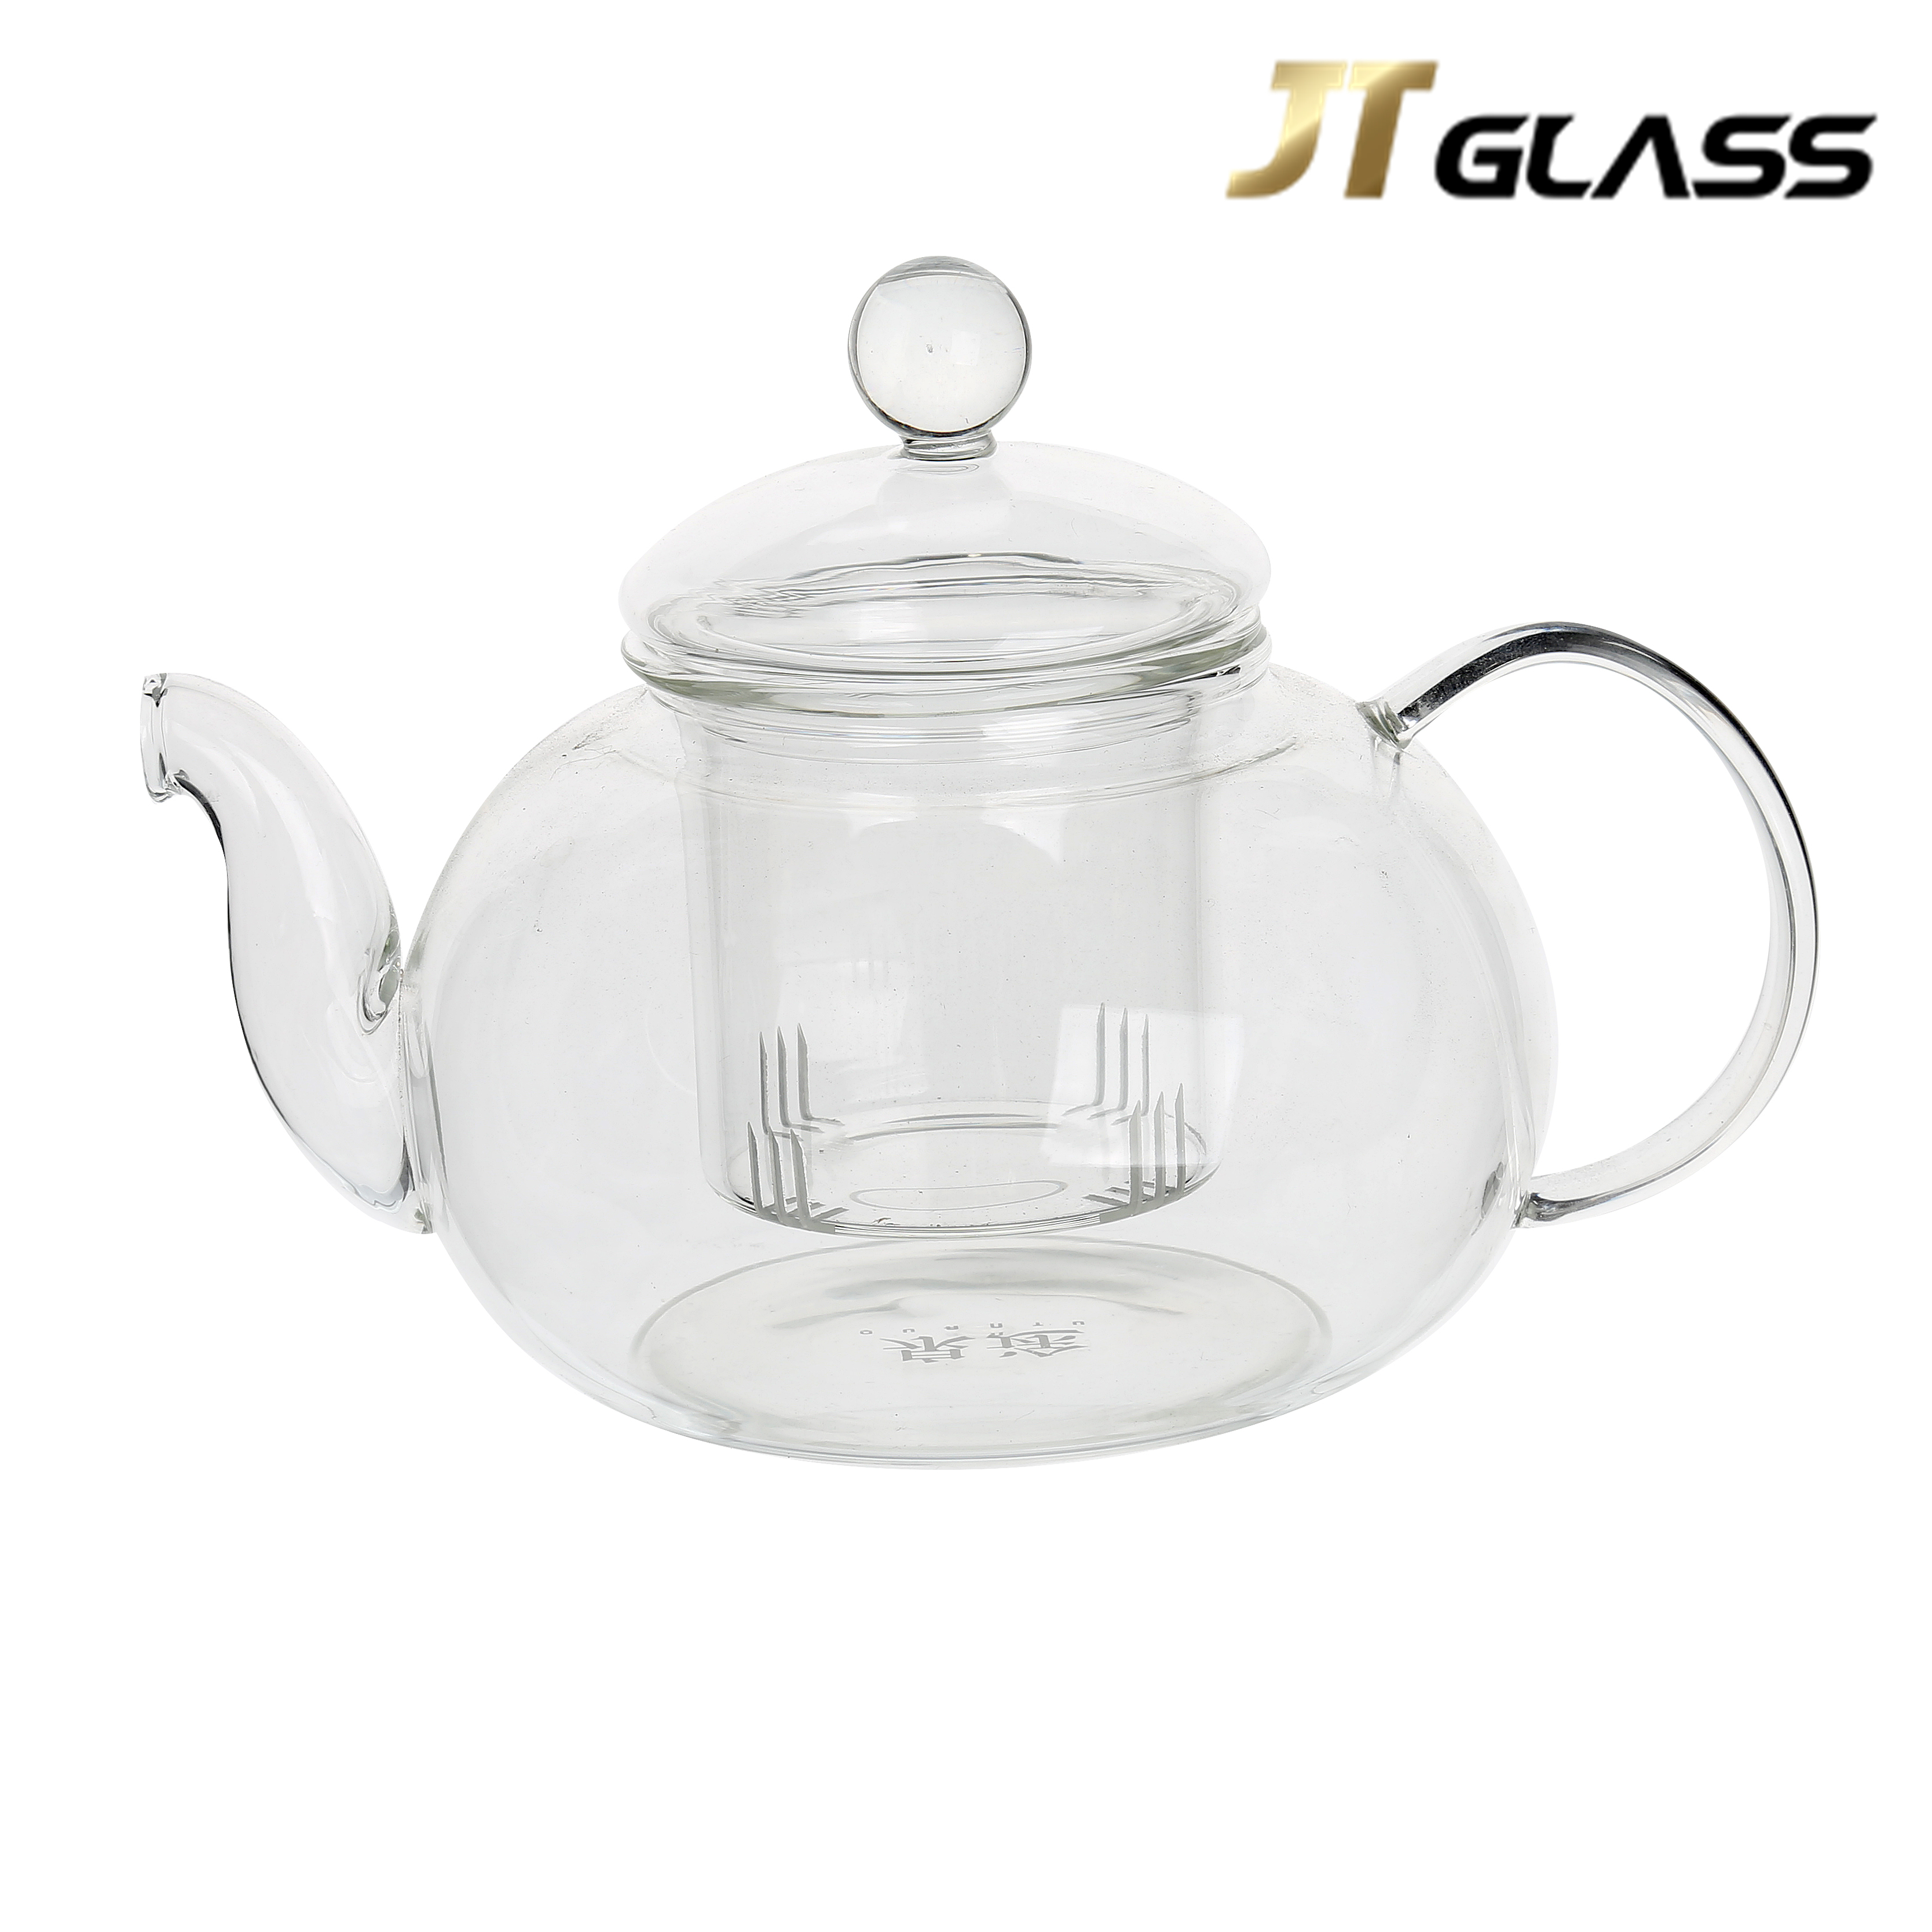 Glass teapot infusion set 400 ML transparent teapot single wall glass teapot 